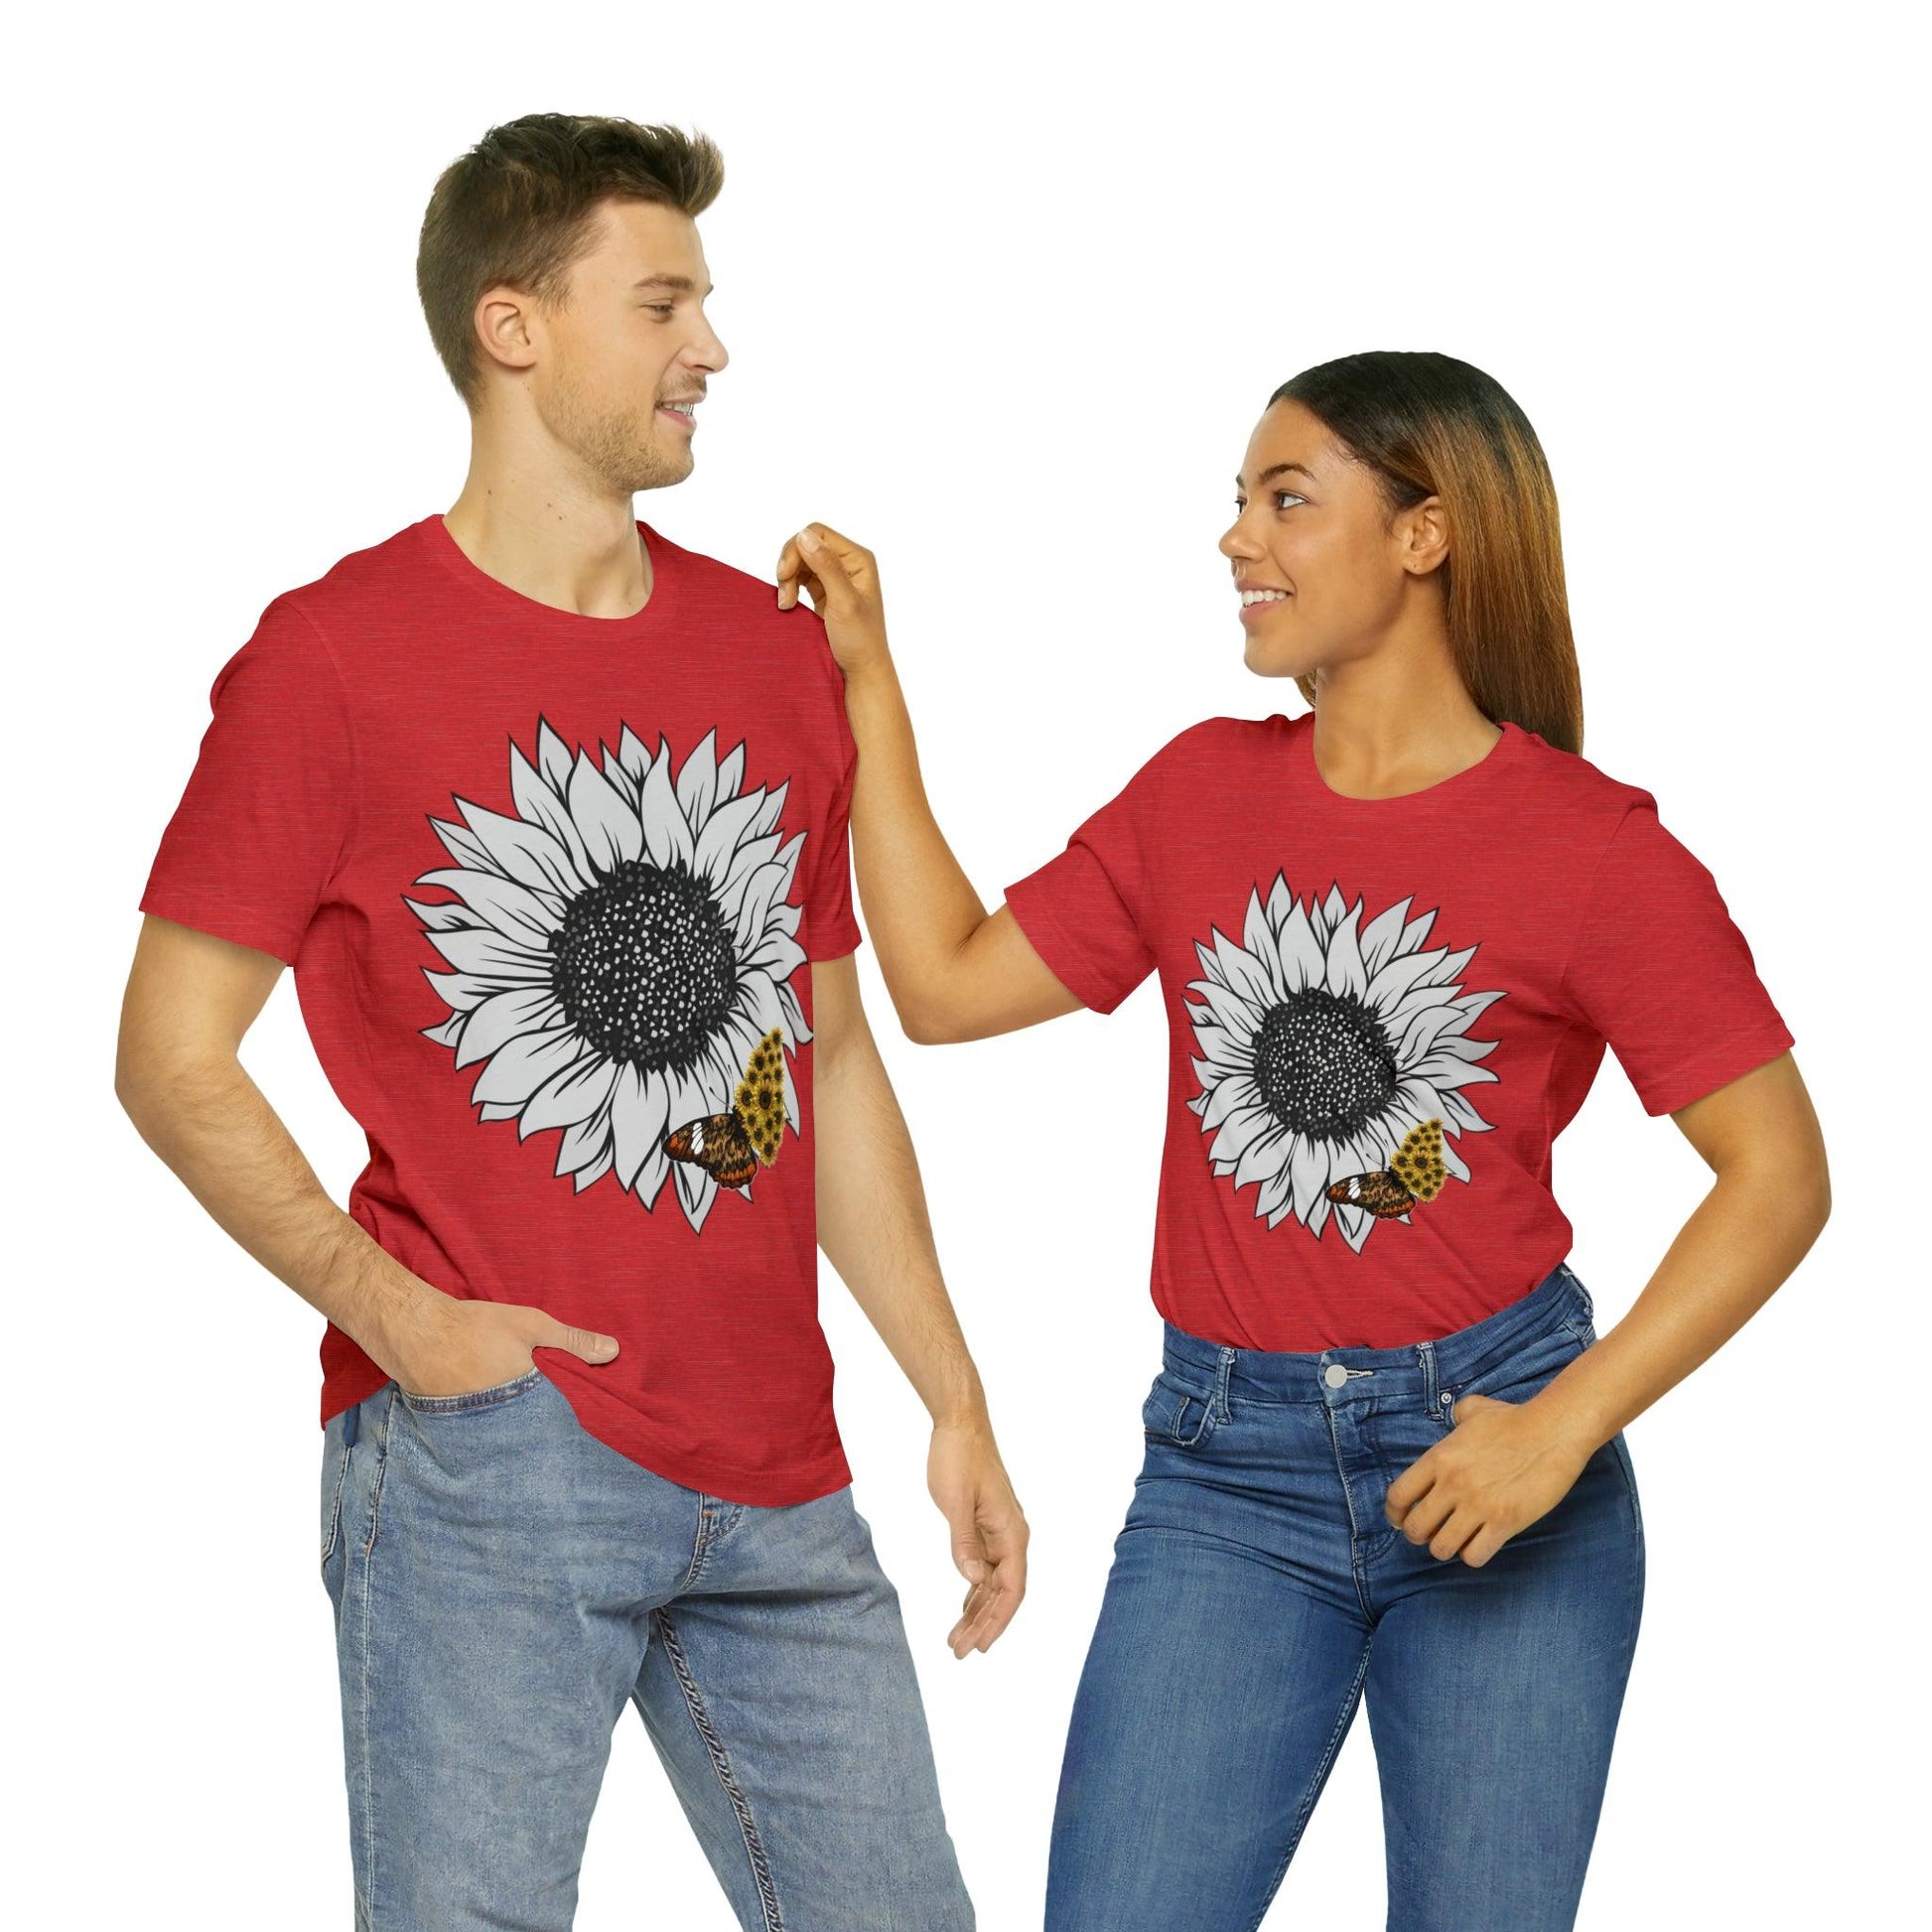 Flower Shirt, Sunflower Shirt, Floral Tee Shirt, Garden Shirt, Womens Fall Summer Shirt Sunshine Tee, Gift for Gardener, Nature love shirt - Giftsmojo